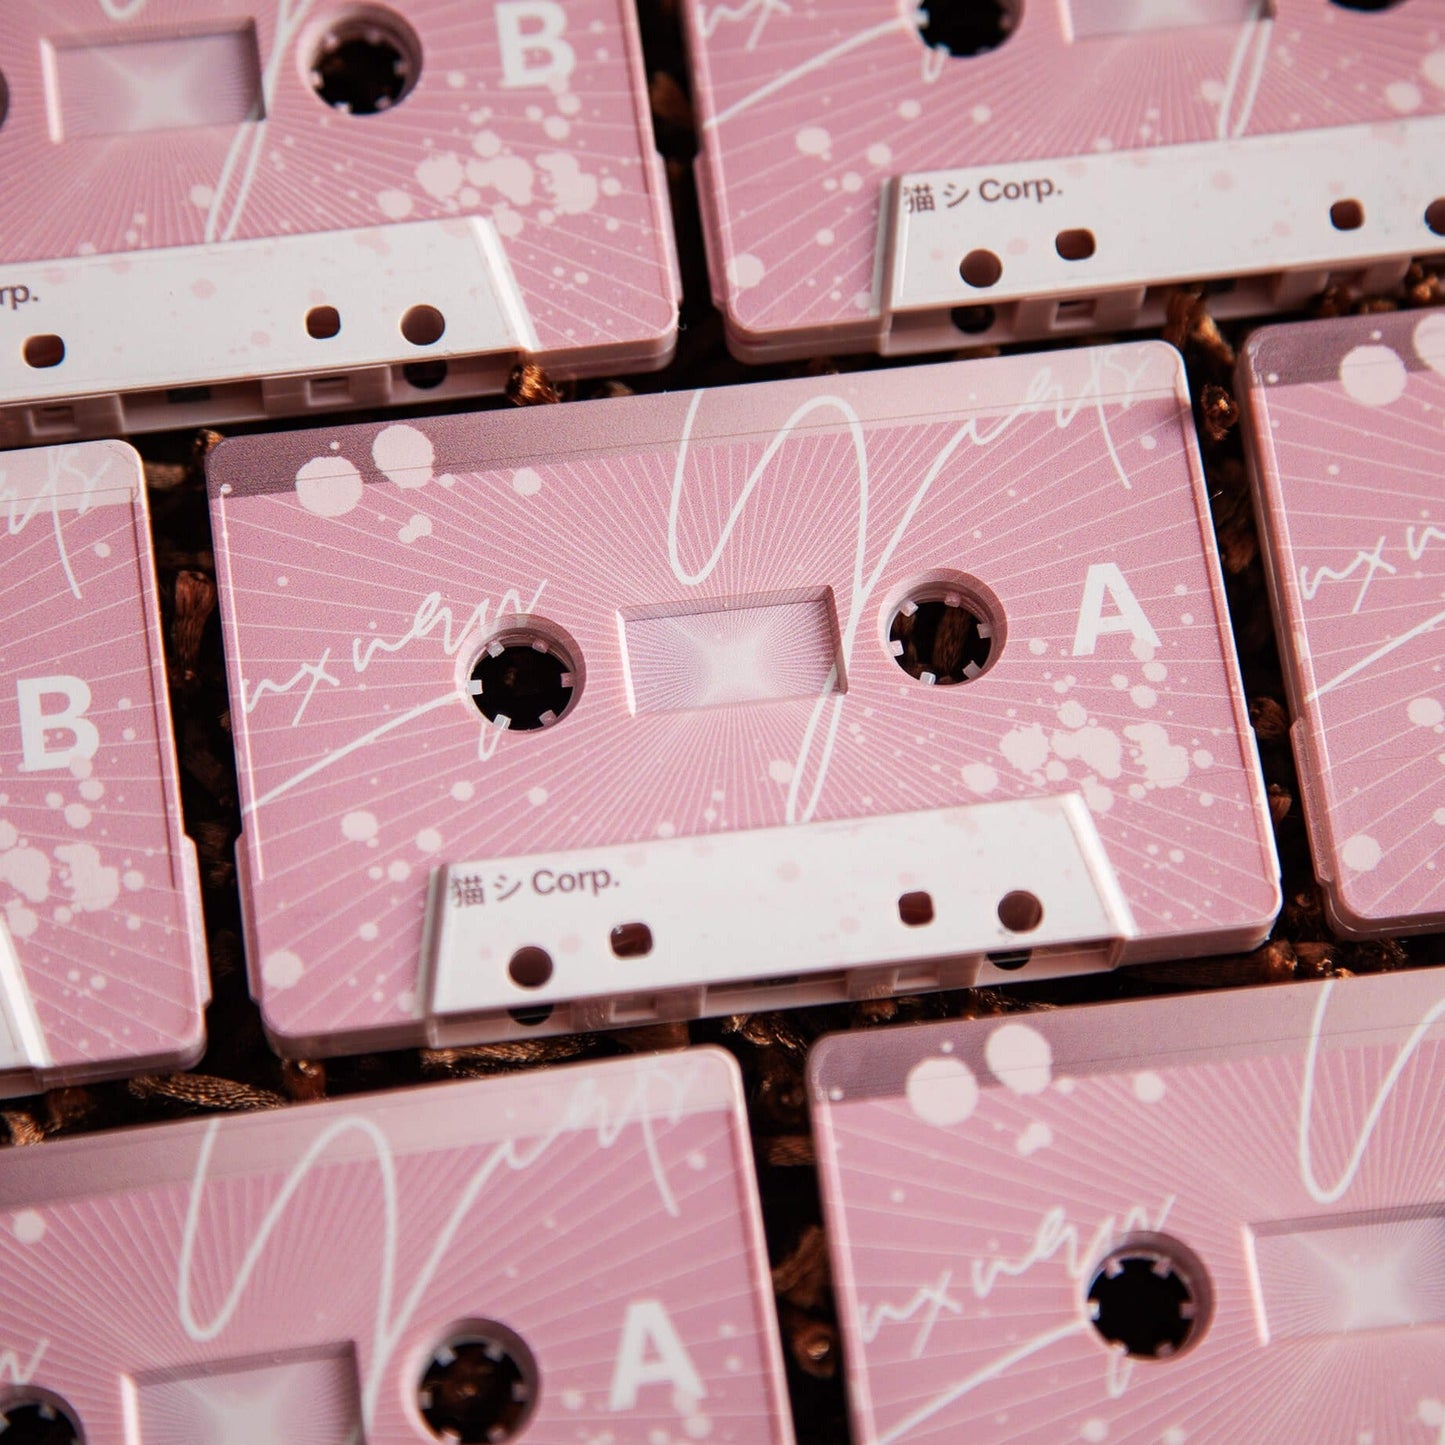 猫 シ Corp. - LUXURY GIRLS cassette